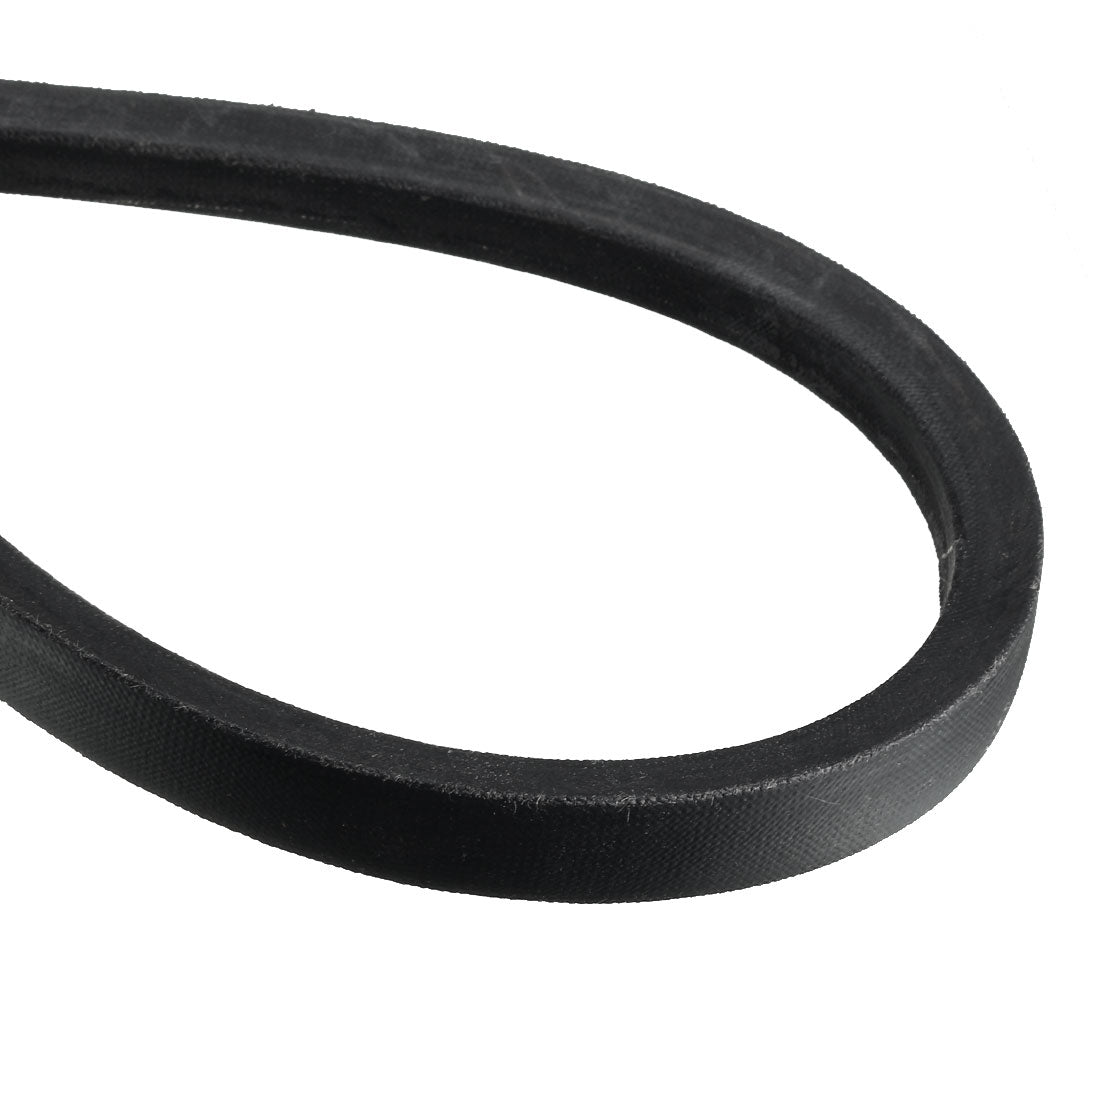 uxcell Uxcell B49 V-Belts 49" Pitch Length, B-Section Rubber Drive Belt 2pcs